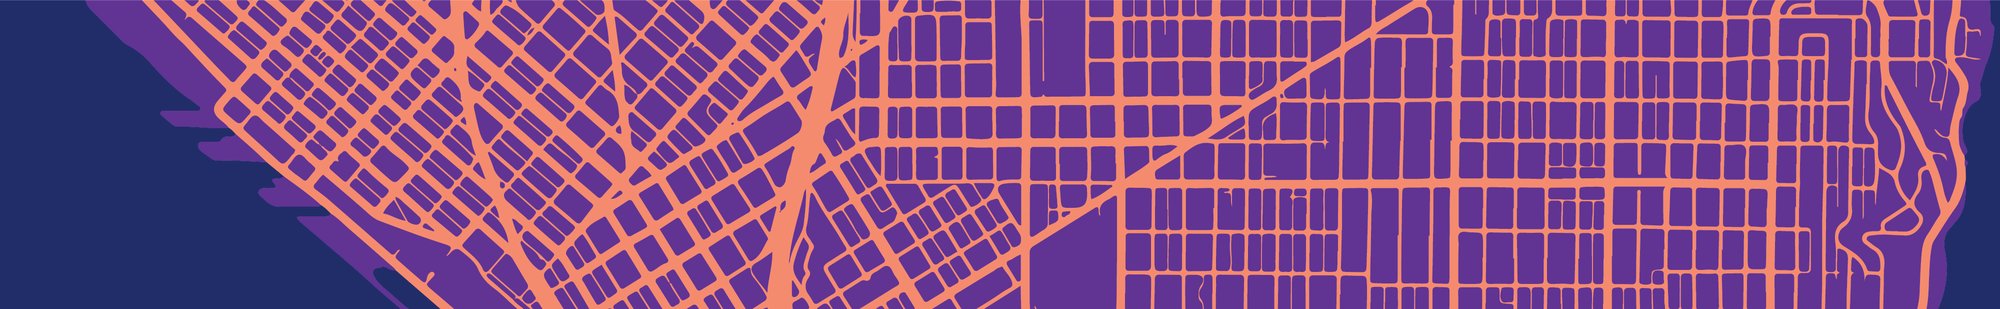 Purple and orange city map outline